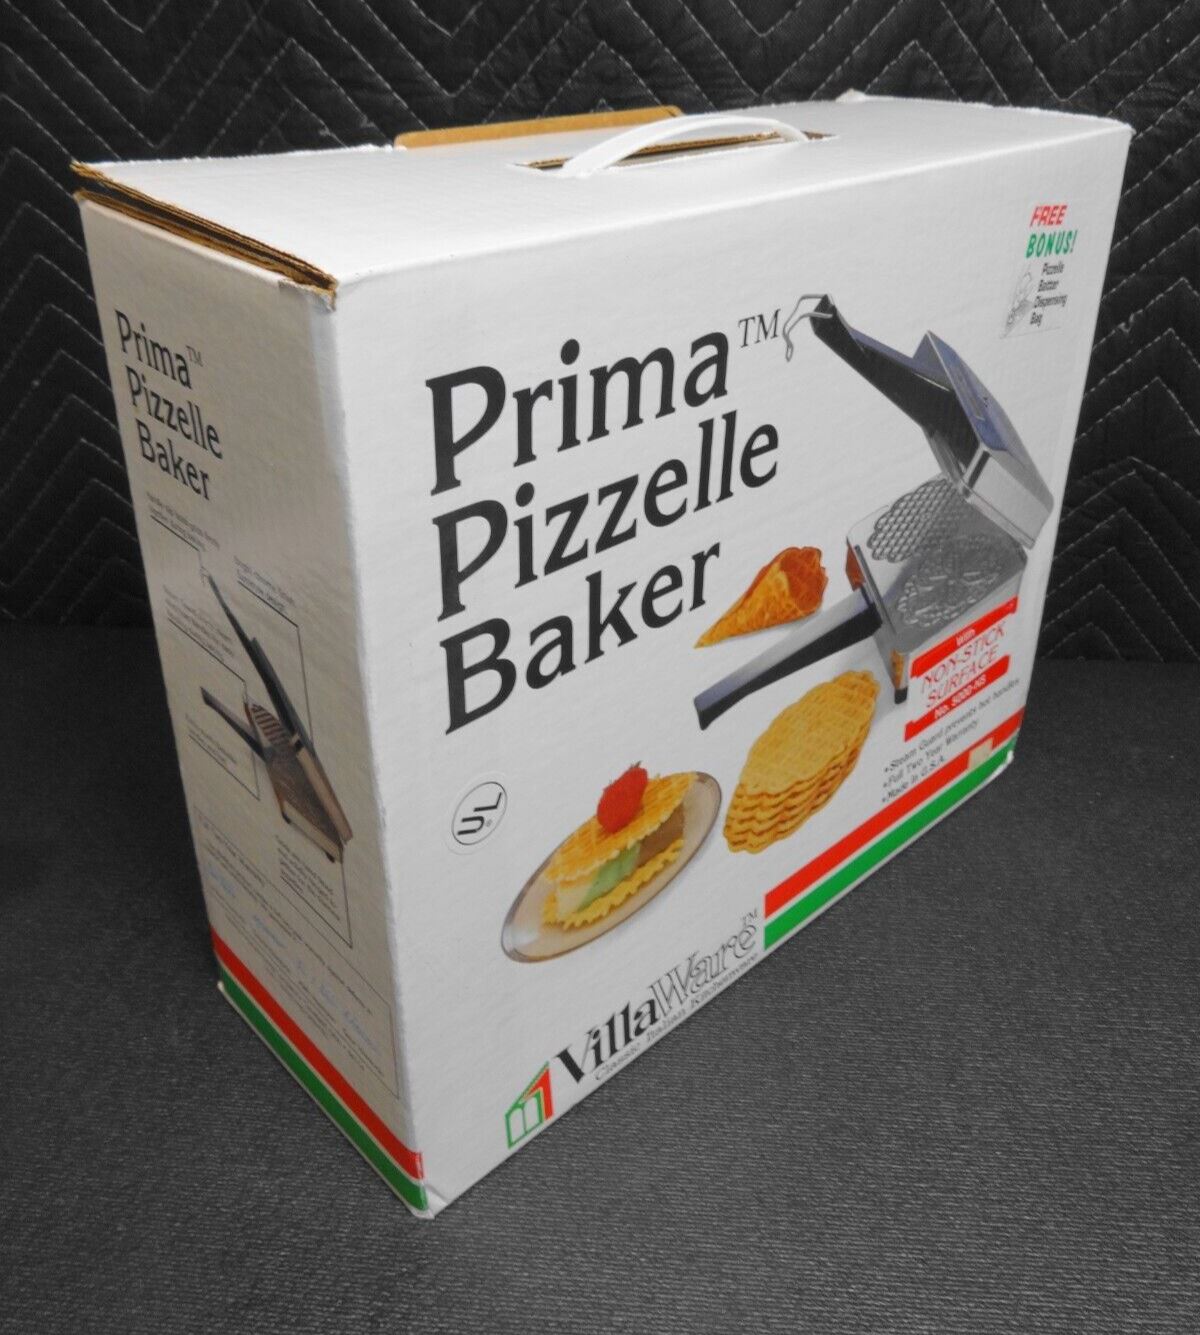 VillaWare Prima Professional Pizzelle Baker Italian Cookie Maker 5000-NS